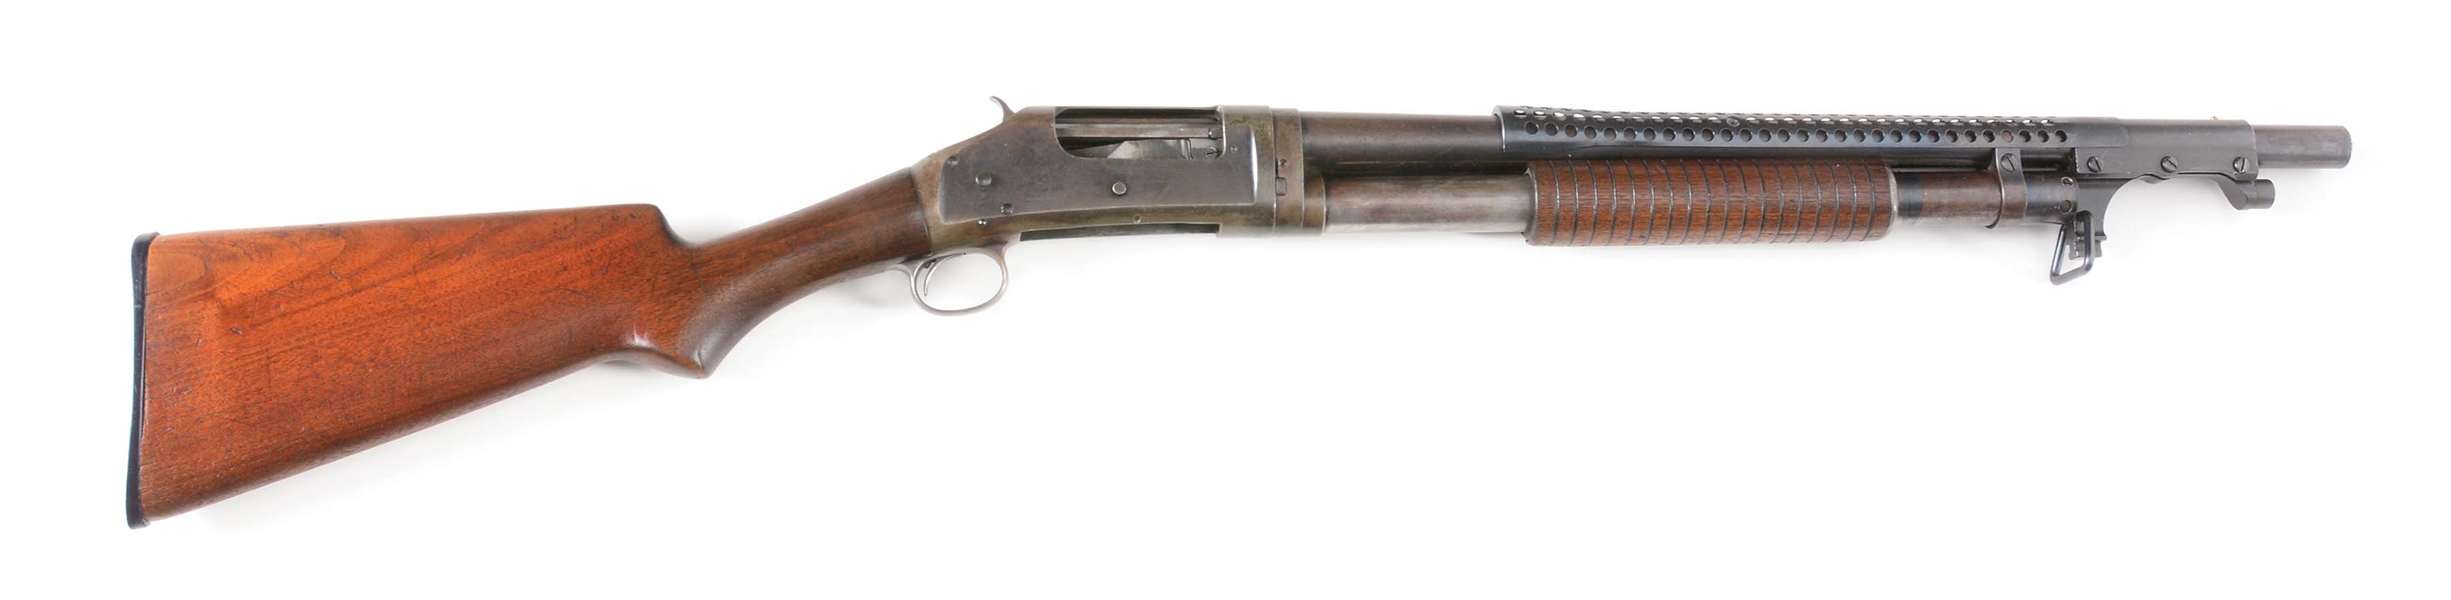 (C) WINCHESTER MODEL 1897 PUMP ACTION SHOTGUN, TRENCH GUN CONFIGURATION, MADE IN 1910.